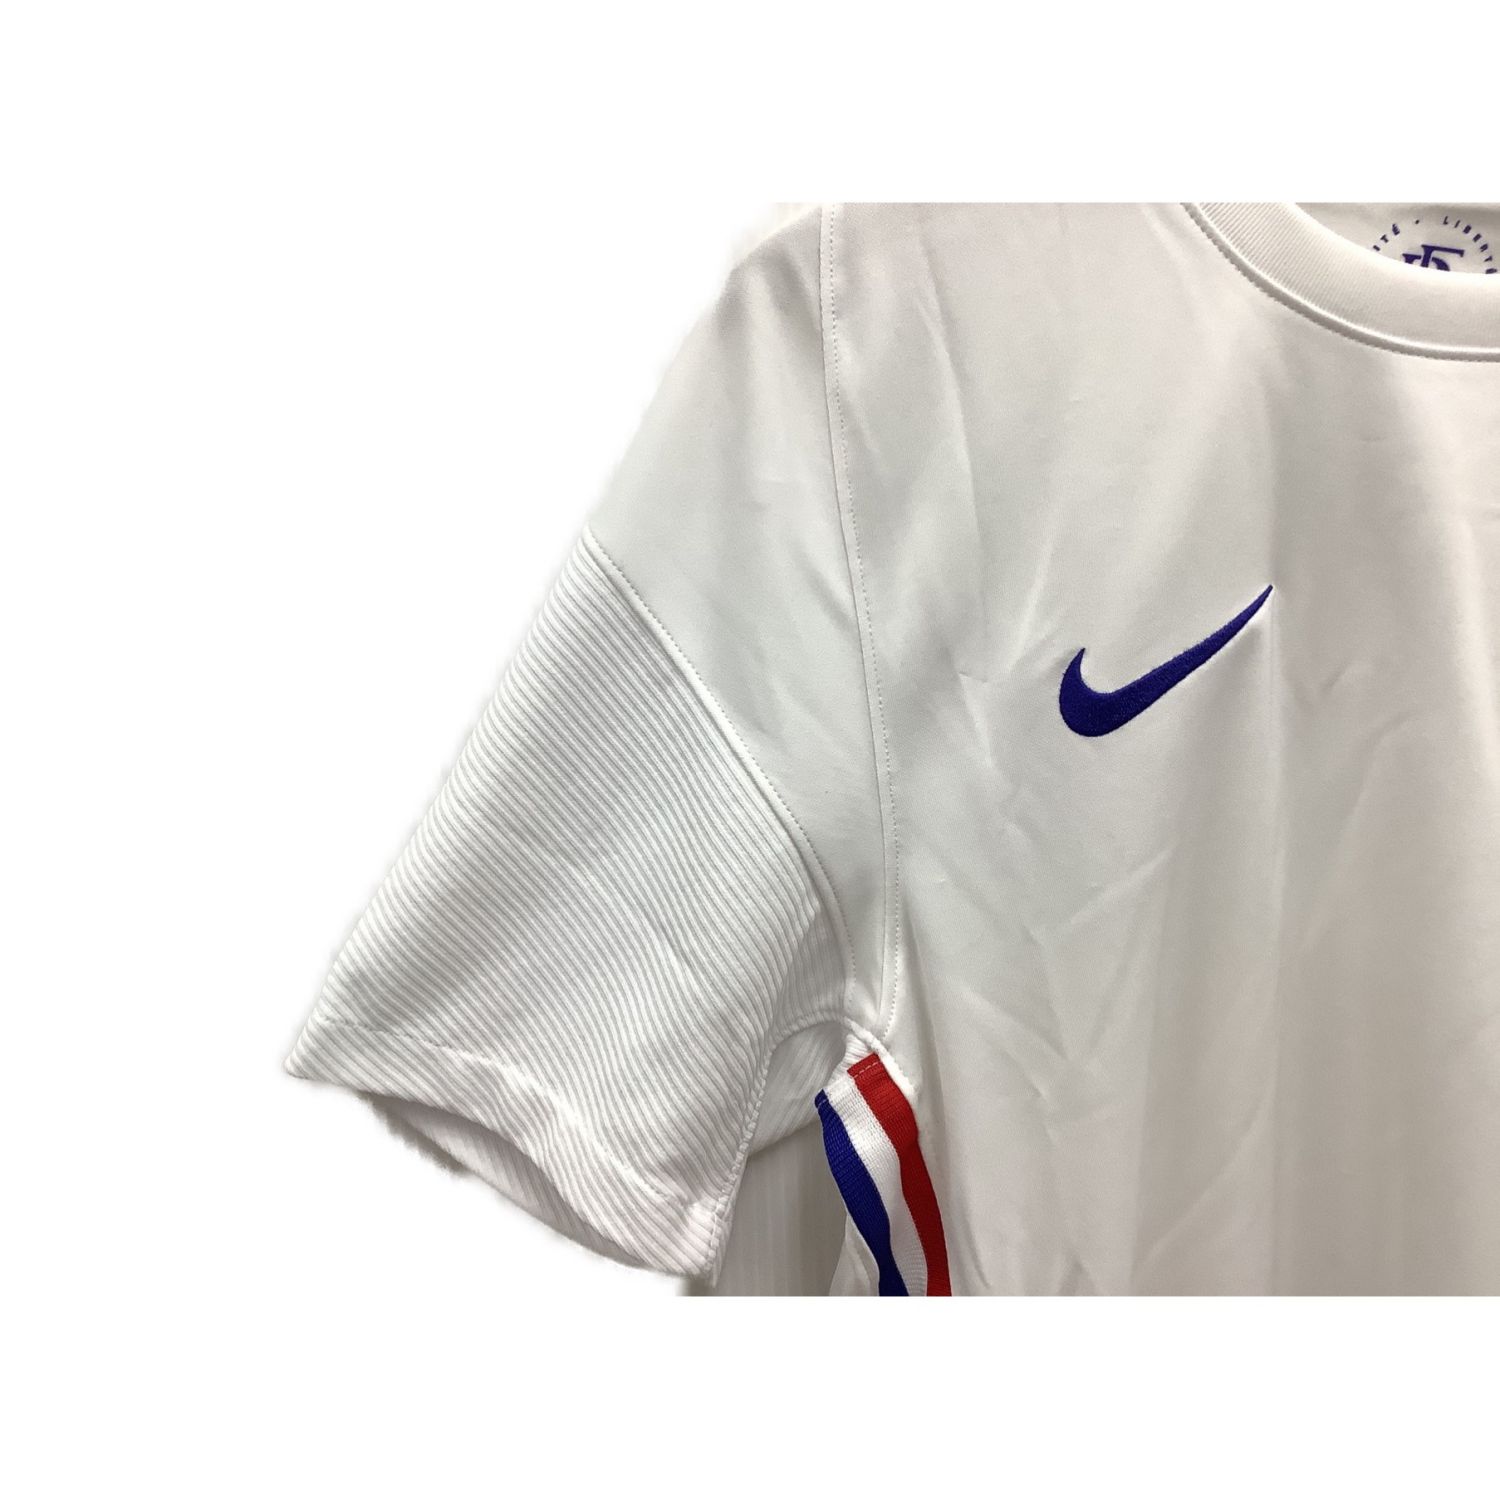 Nike ナイキ サッカーユニフォーム メンズ Size S ホワイト フランス代表 Fff アウェイ サッカー レプリカユニフォーム Cdd0699 100 トレファクonline